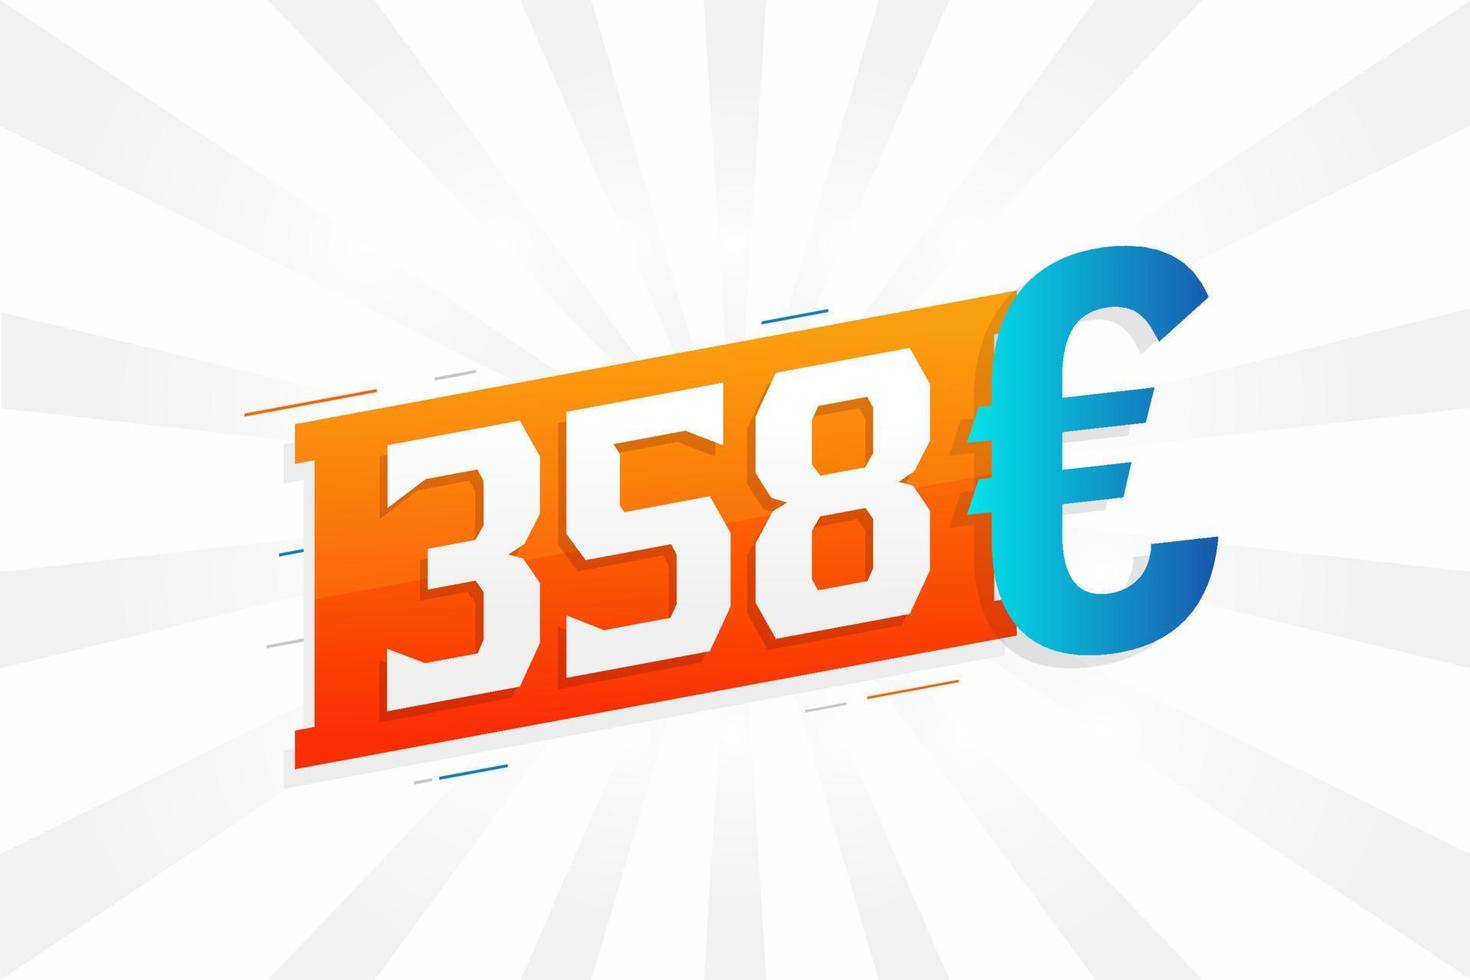 Símbolo de texto vectorial de moneda de 358 euros. 358 euro vector de stock de dinero de la unión europea